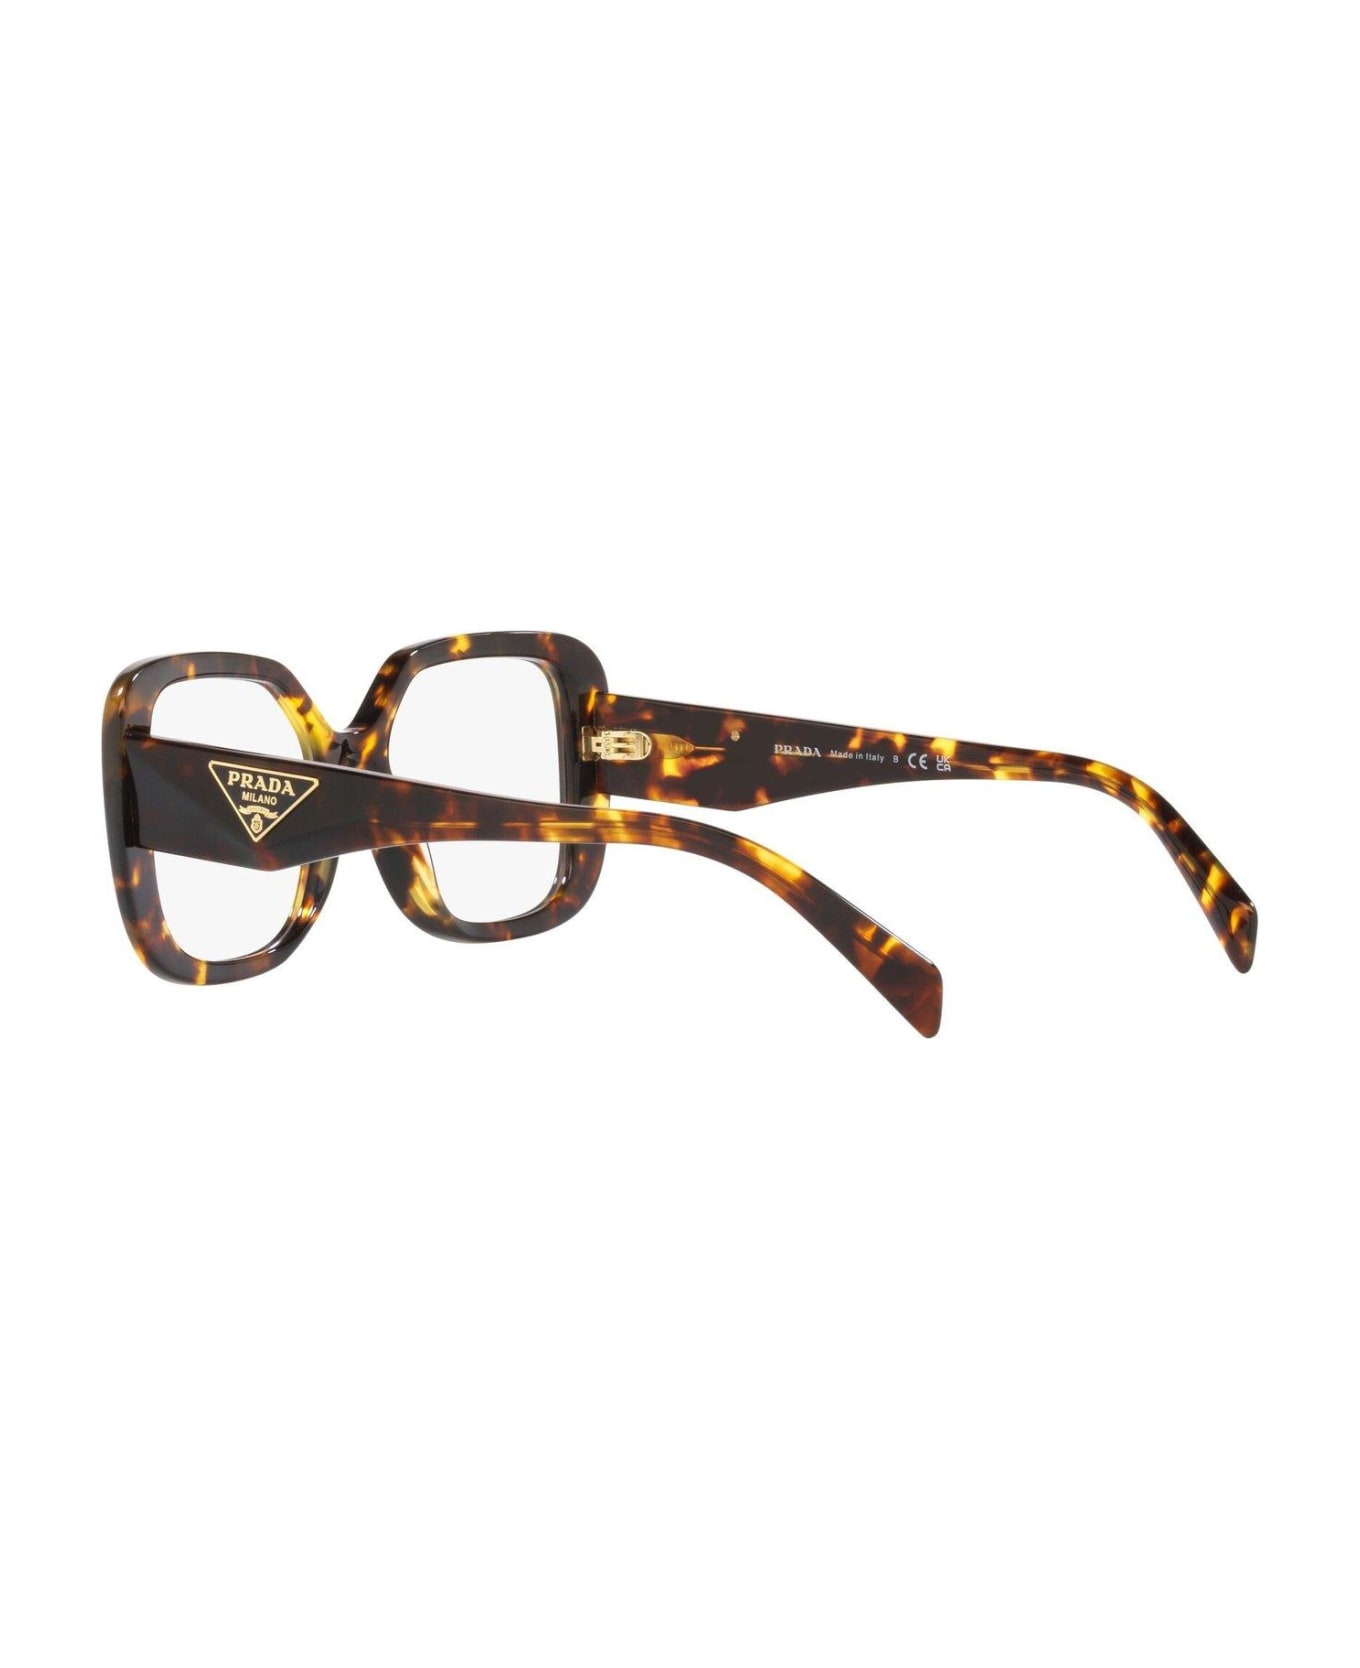 Prada Eyewear Square Frame Glasses